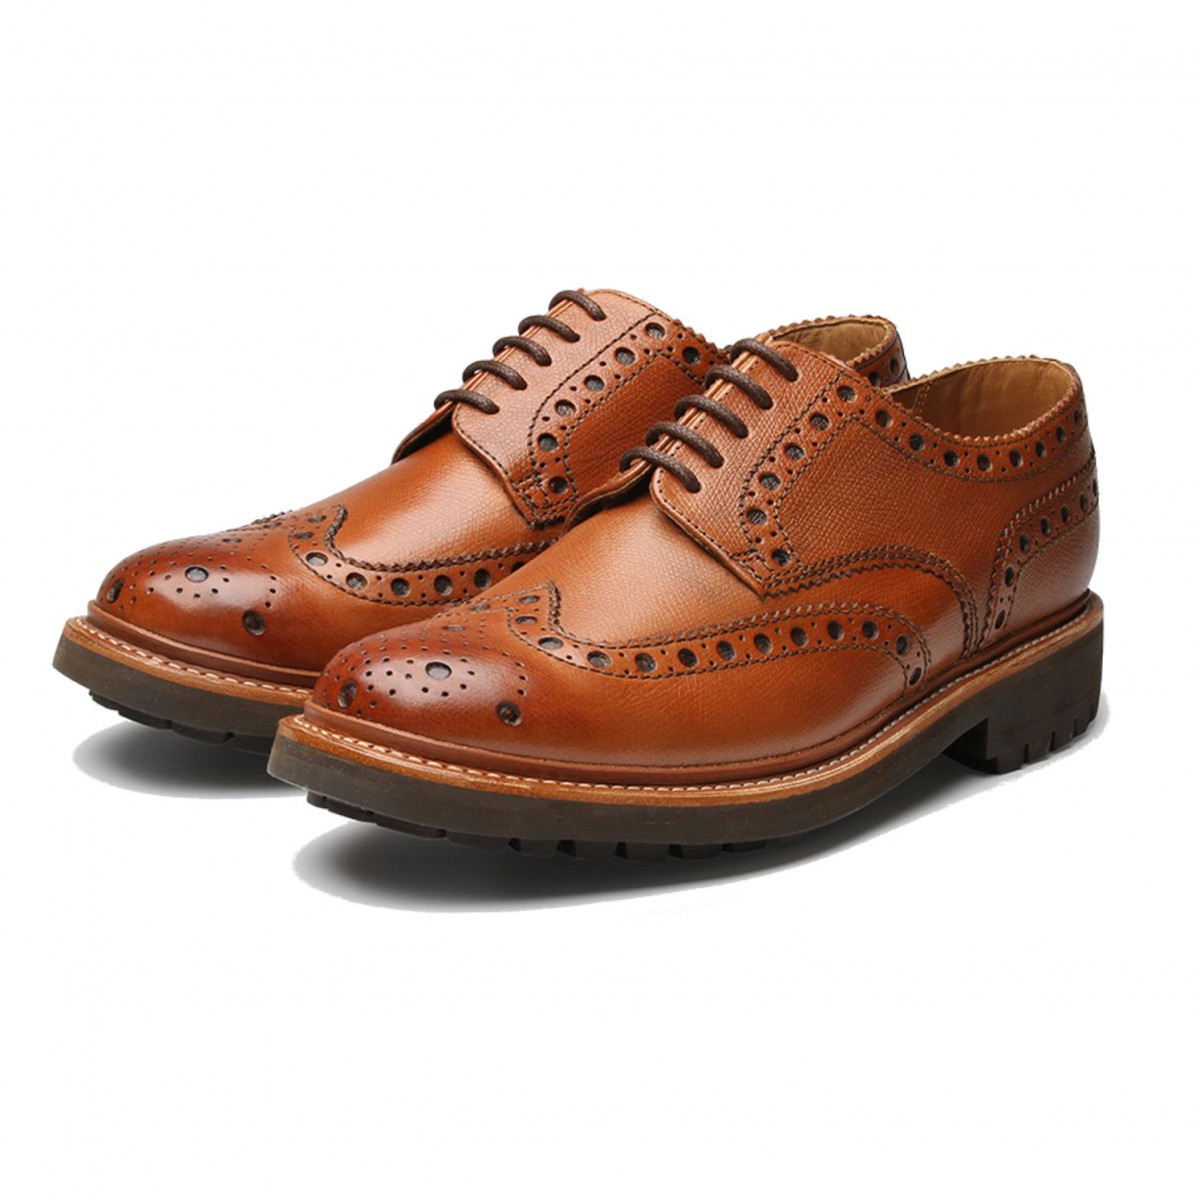 Grenson Archie C - Pediwear Footwear